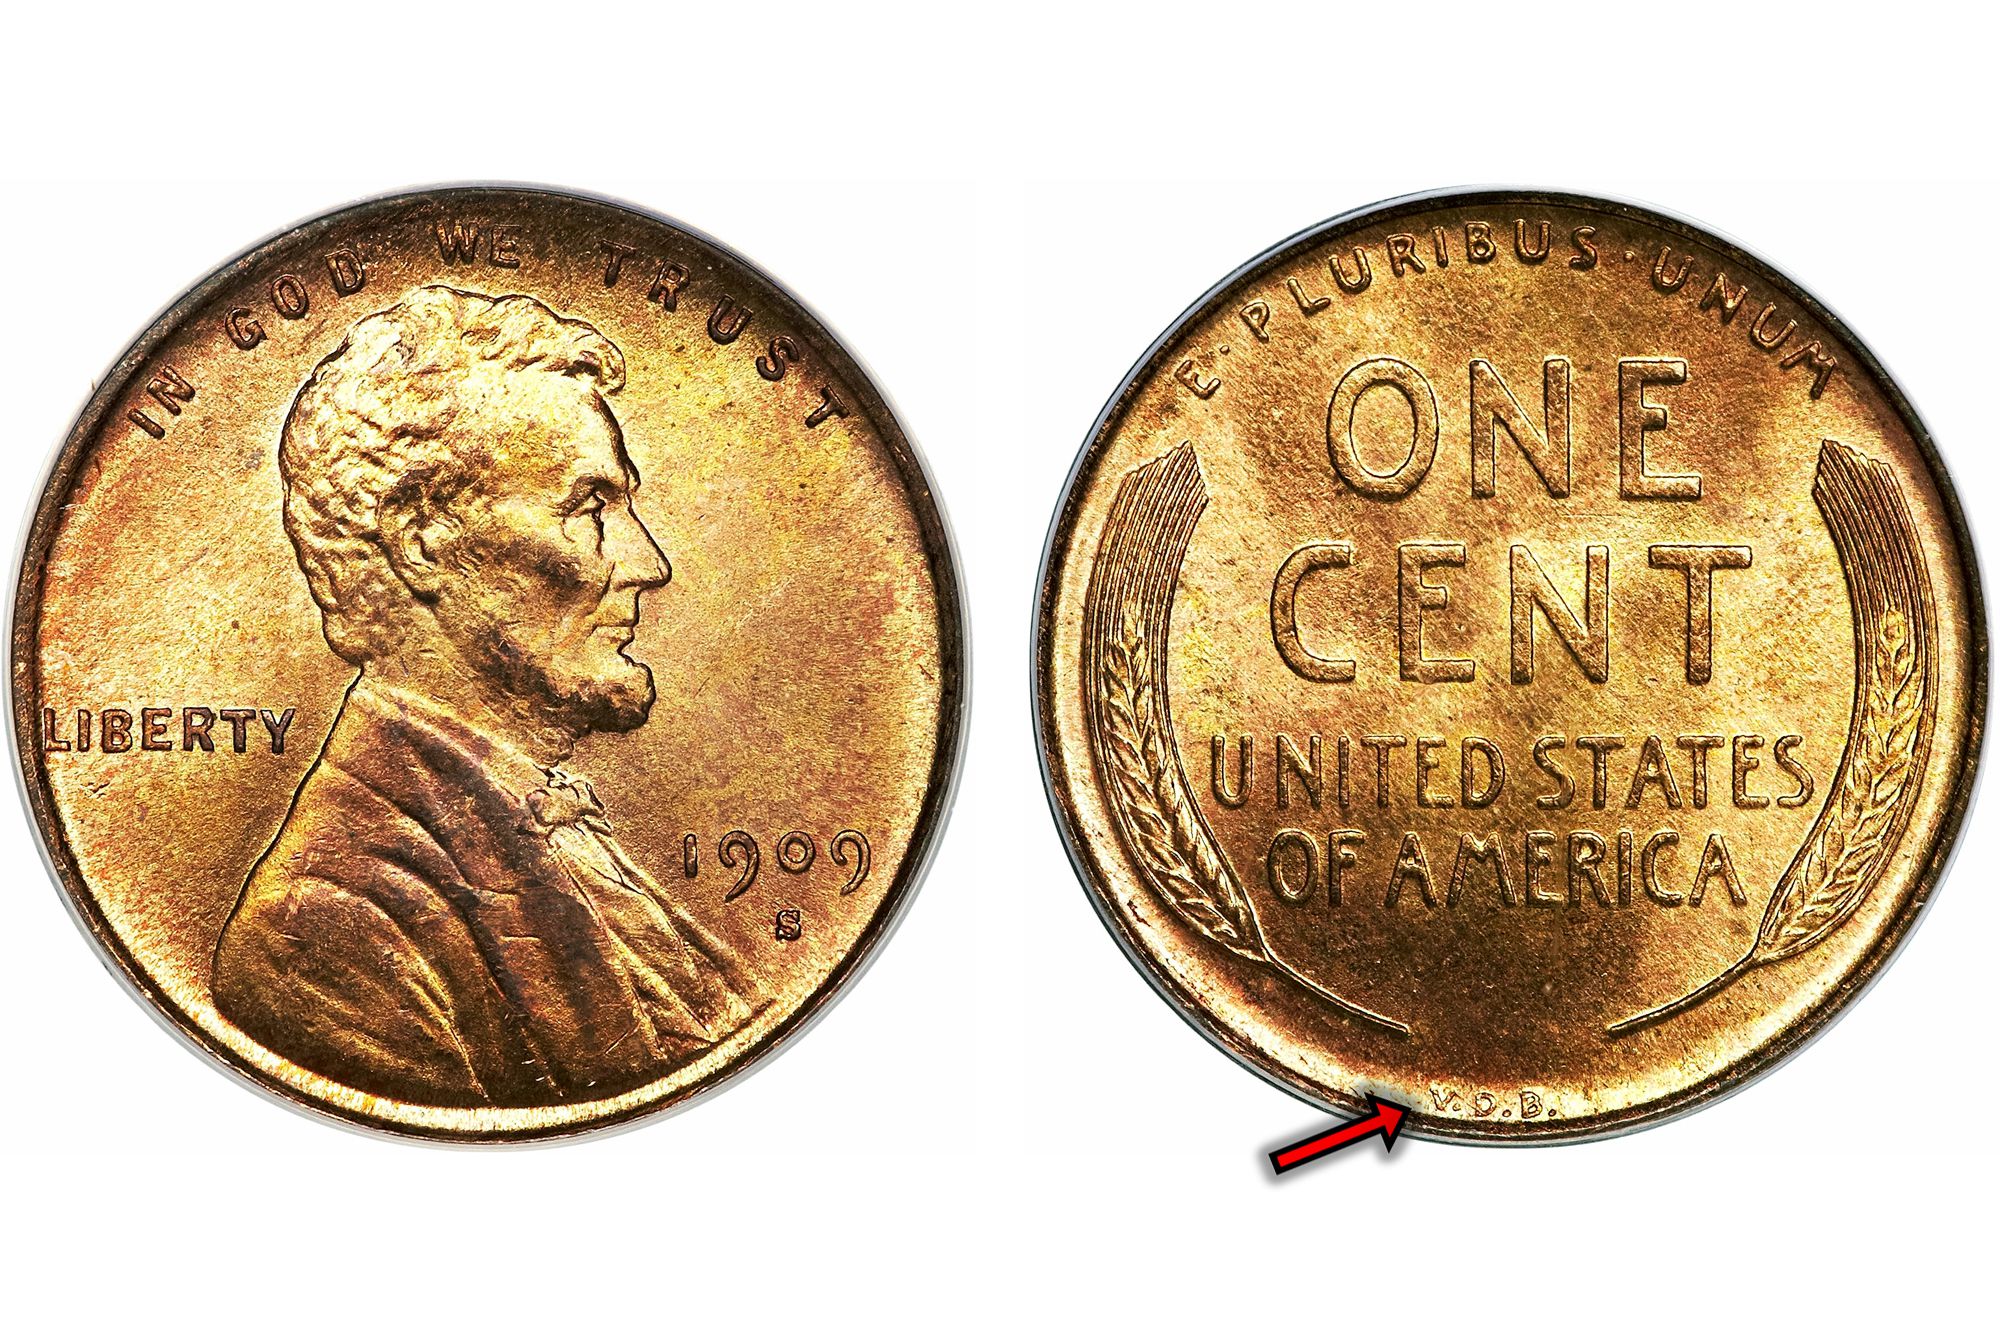 1941 Wheat Penny Value